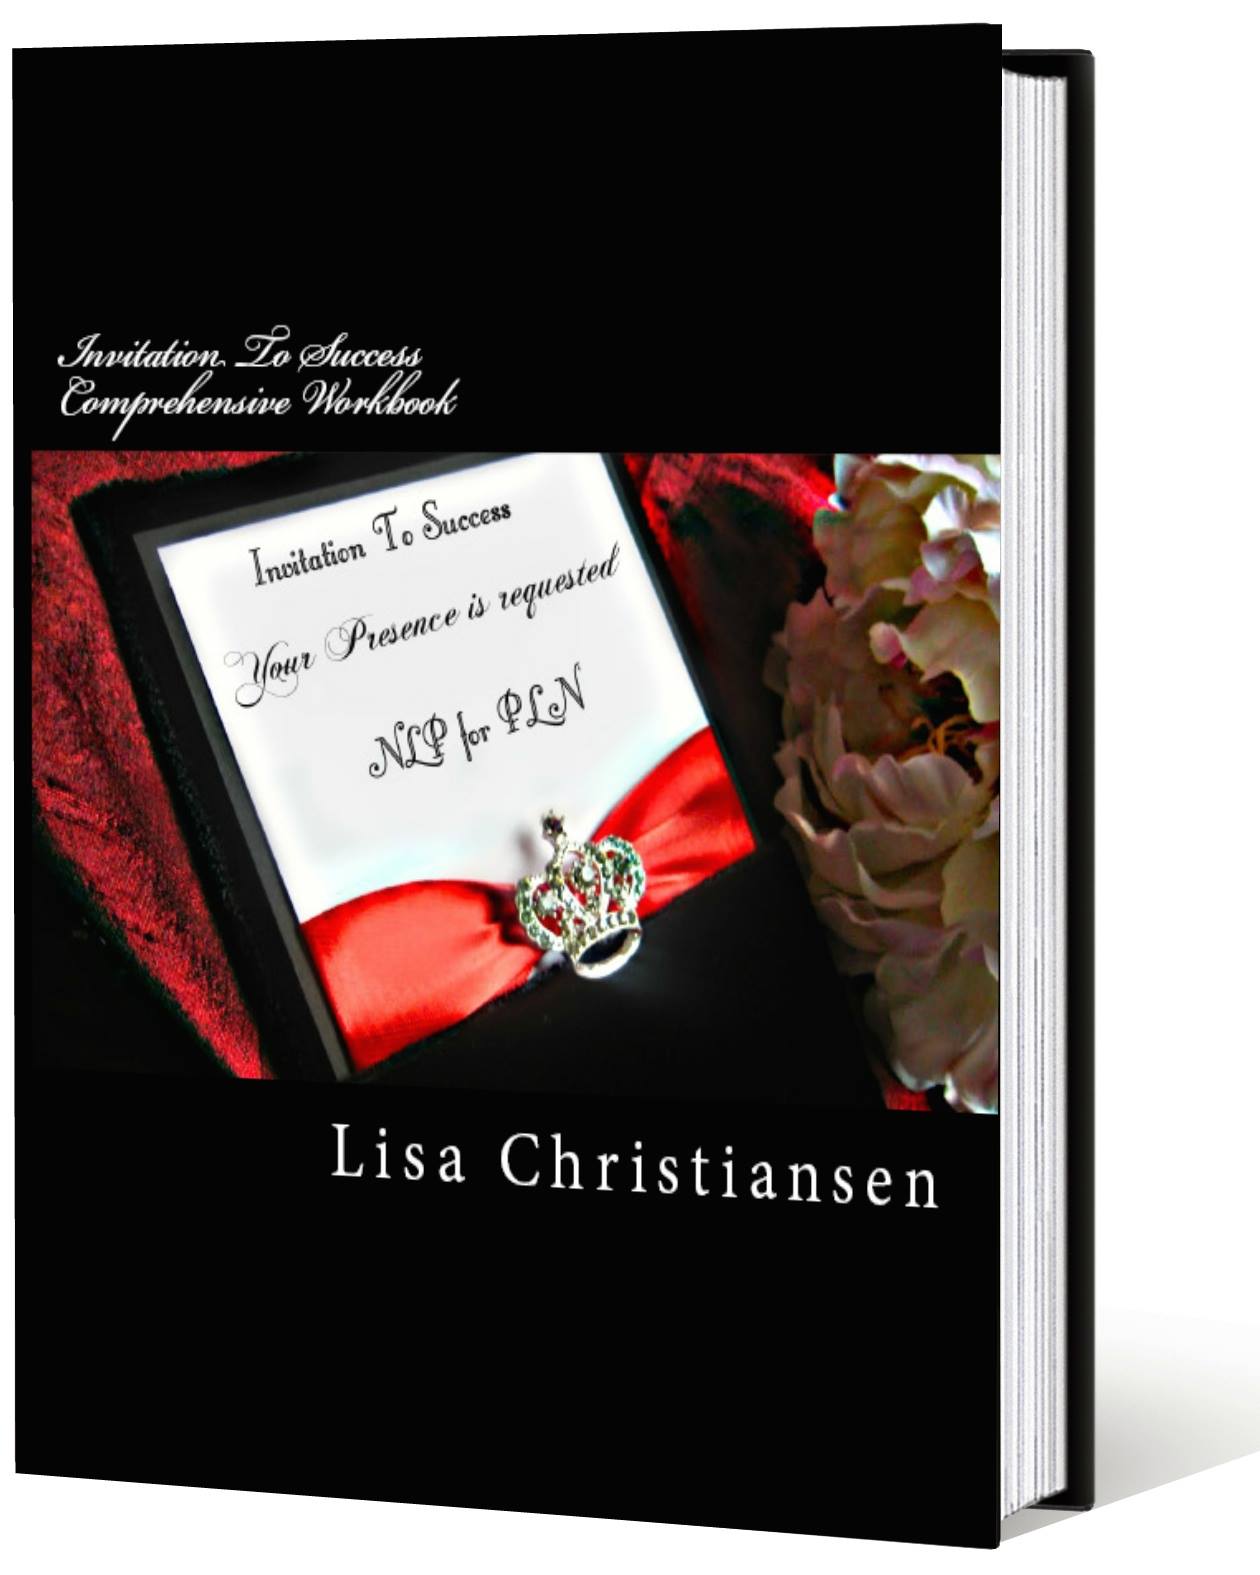 Barnes & Noble features Lisa Christiansen as a premier best selling author.